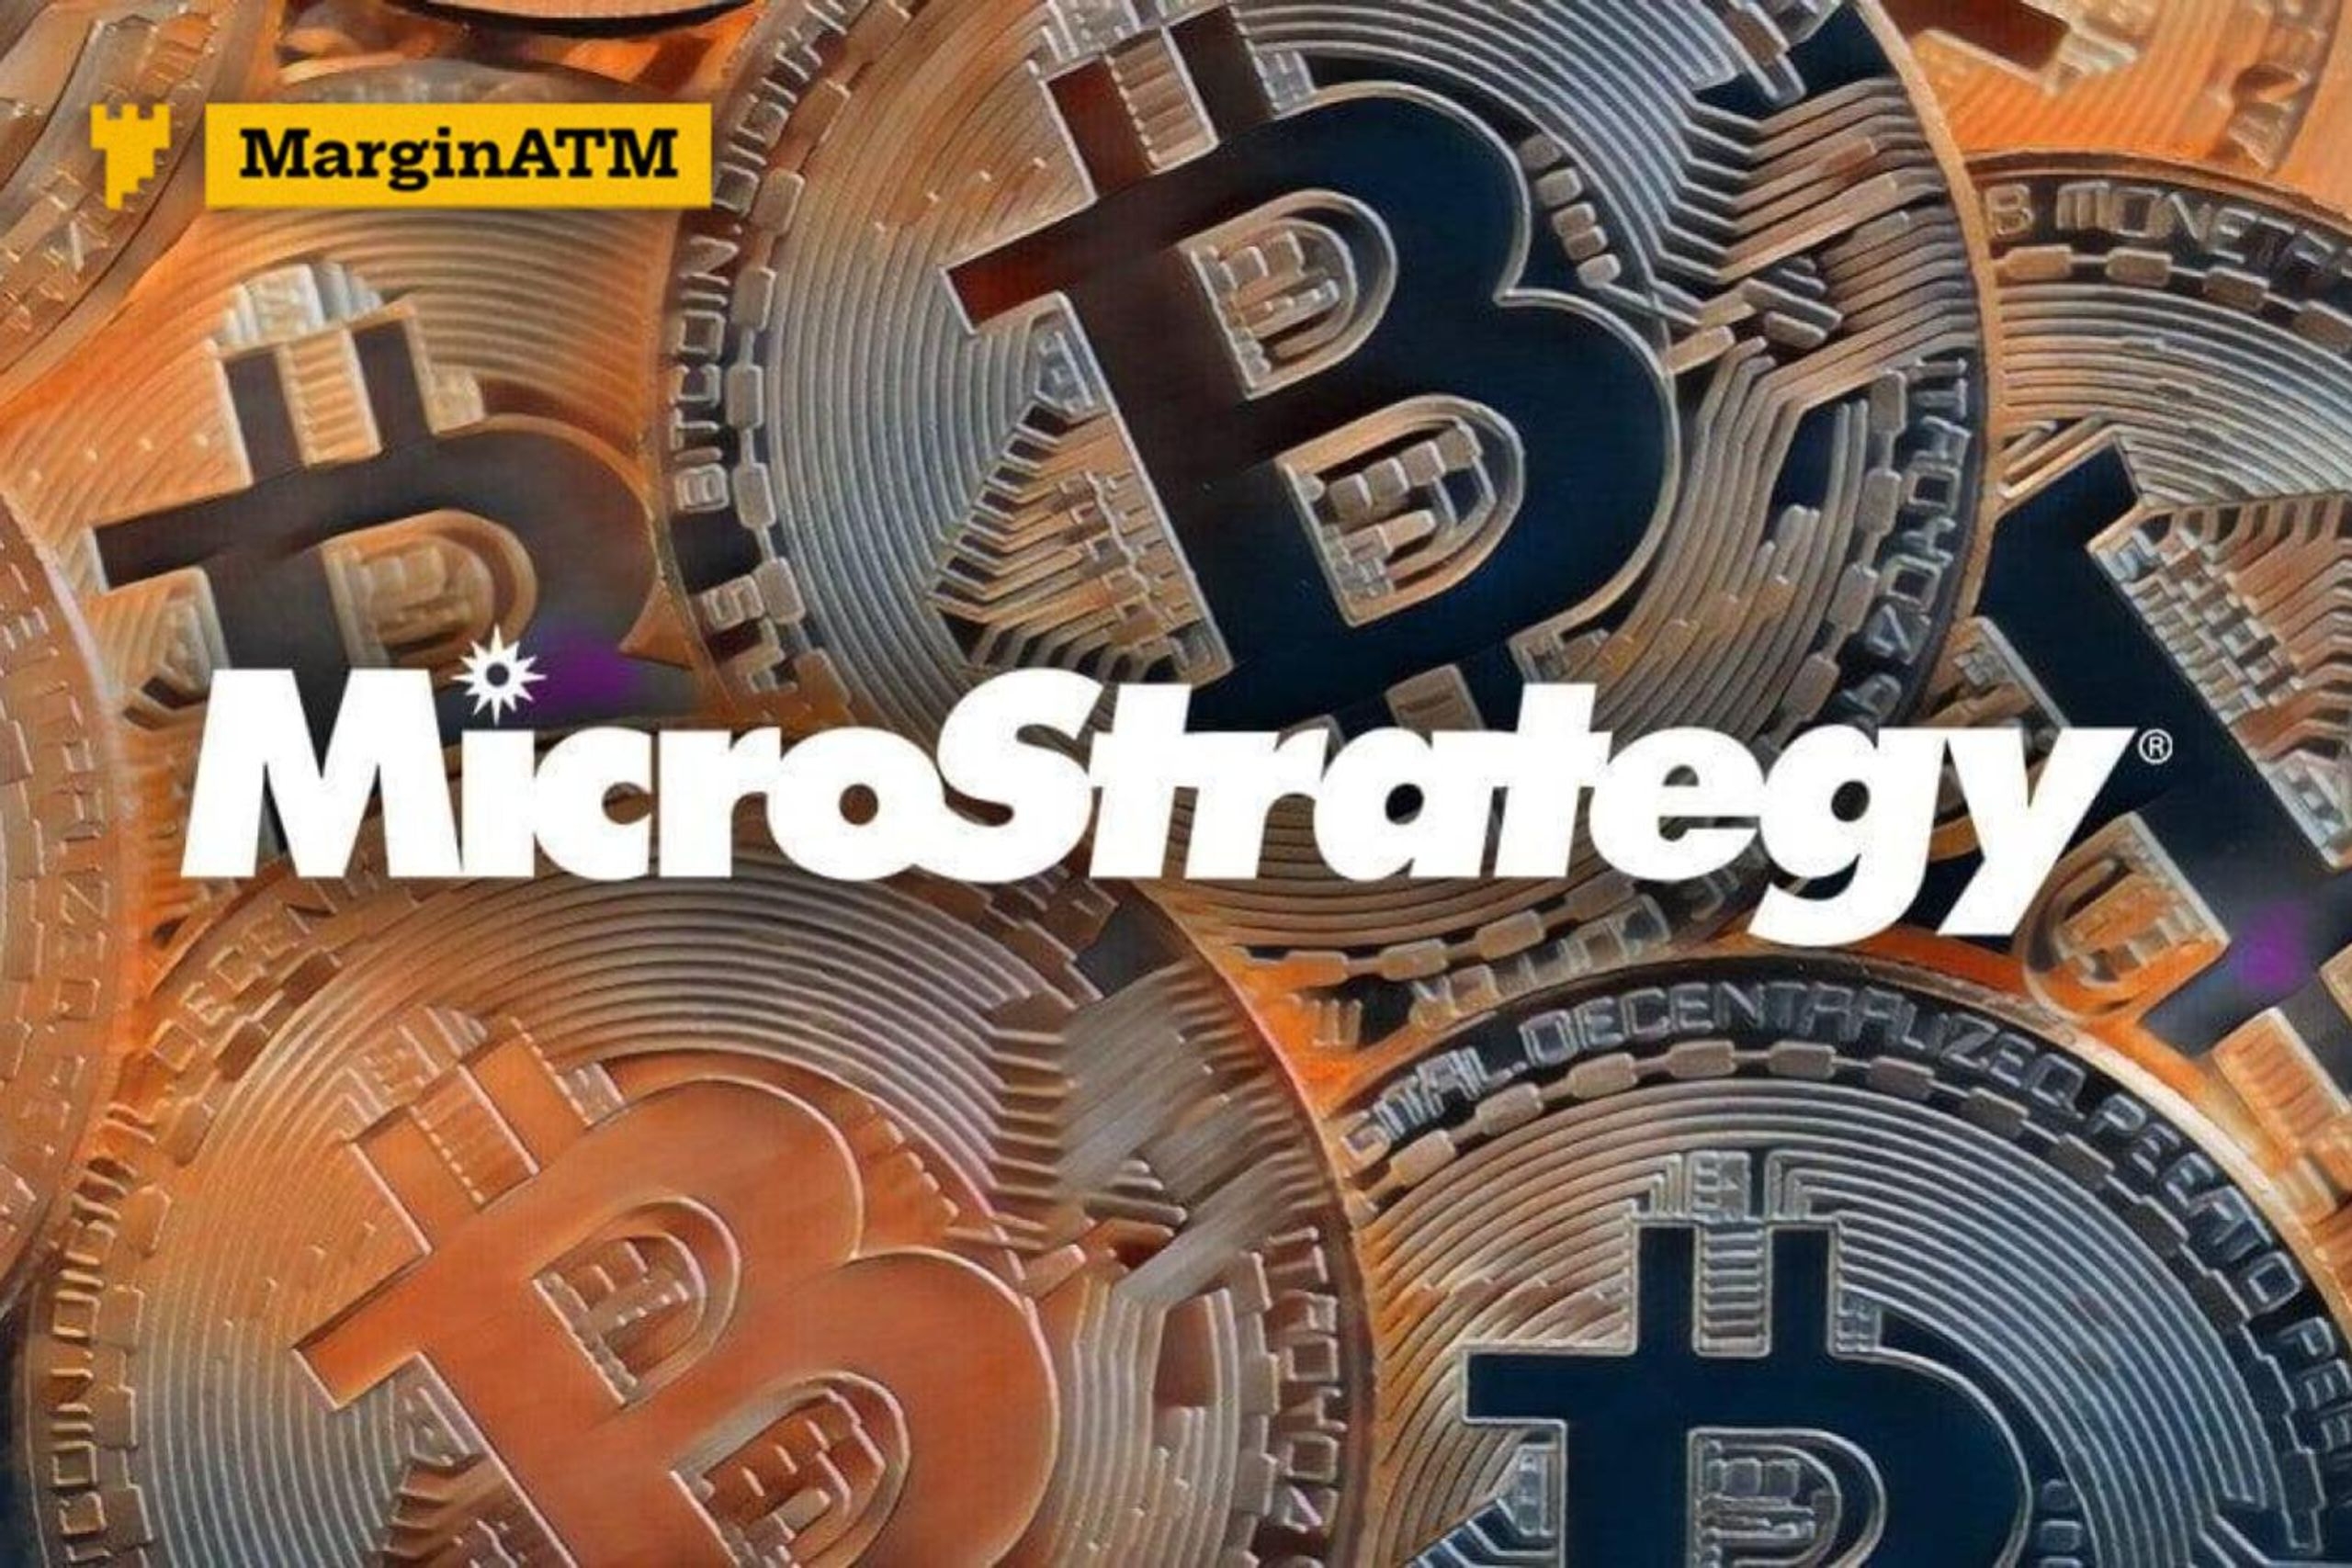 microstrategy mua thêm bitcoin